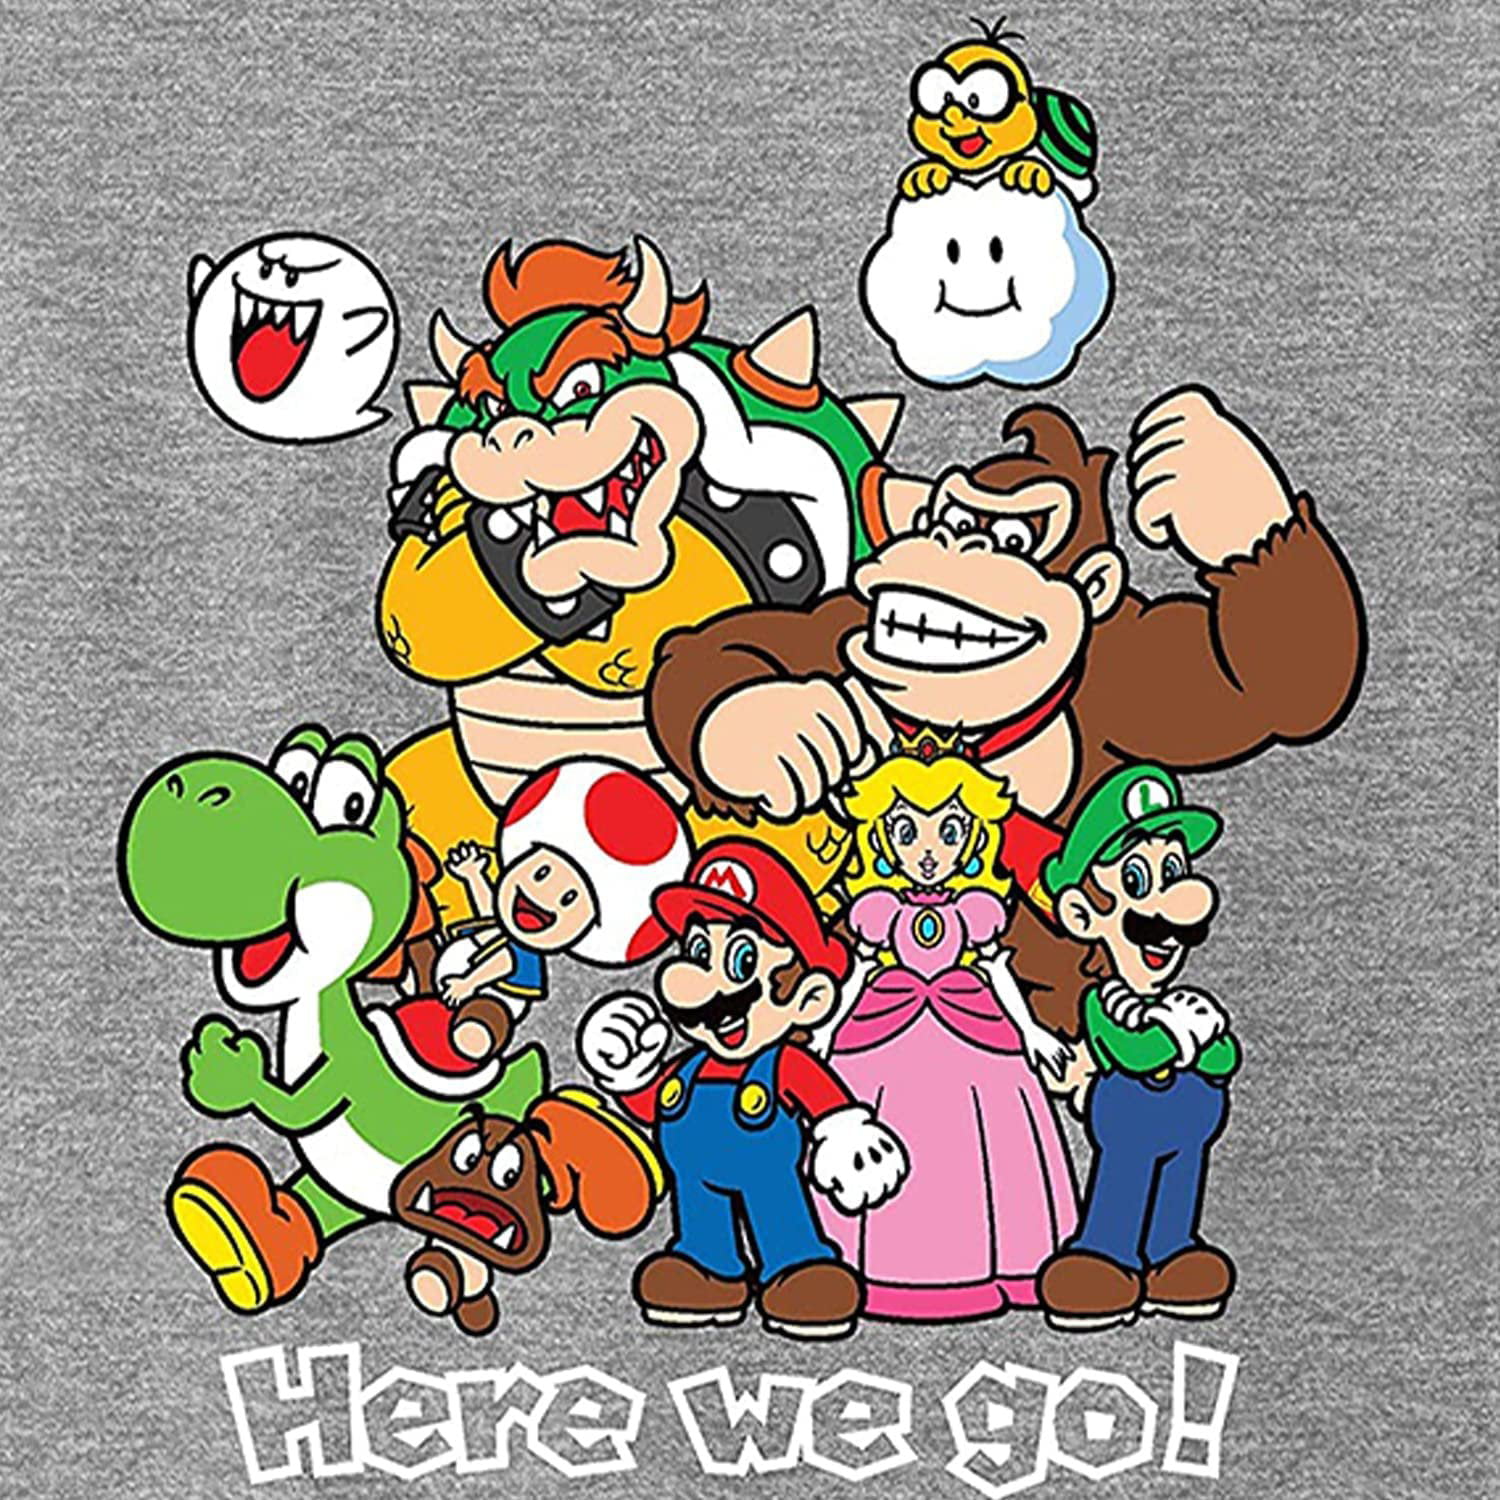 Here We Go! The Best Super Mario Bros. Games